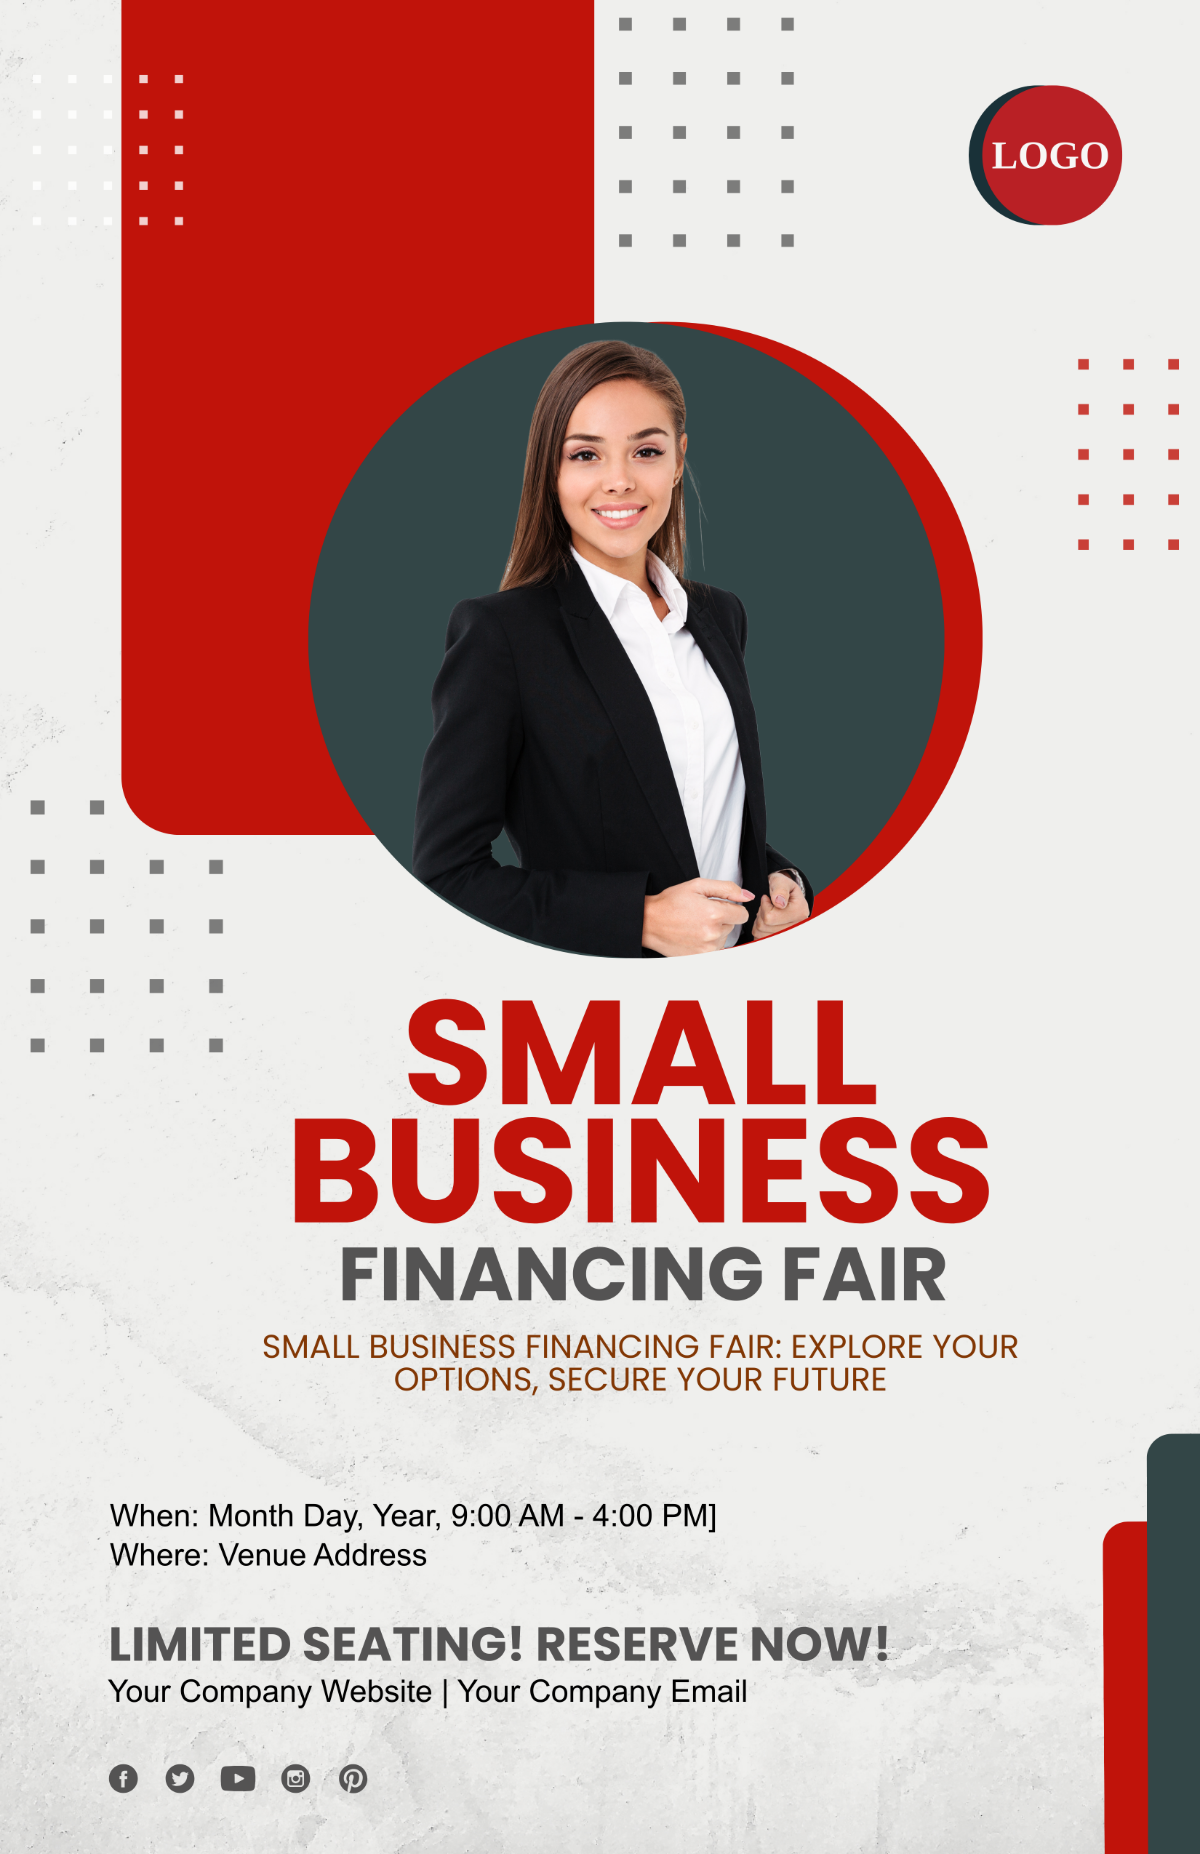 Small Business Financing Fair Poster Template